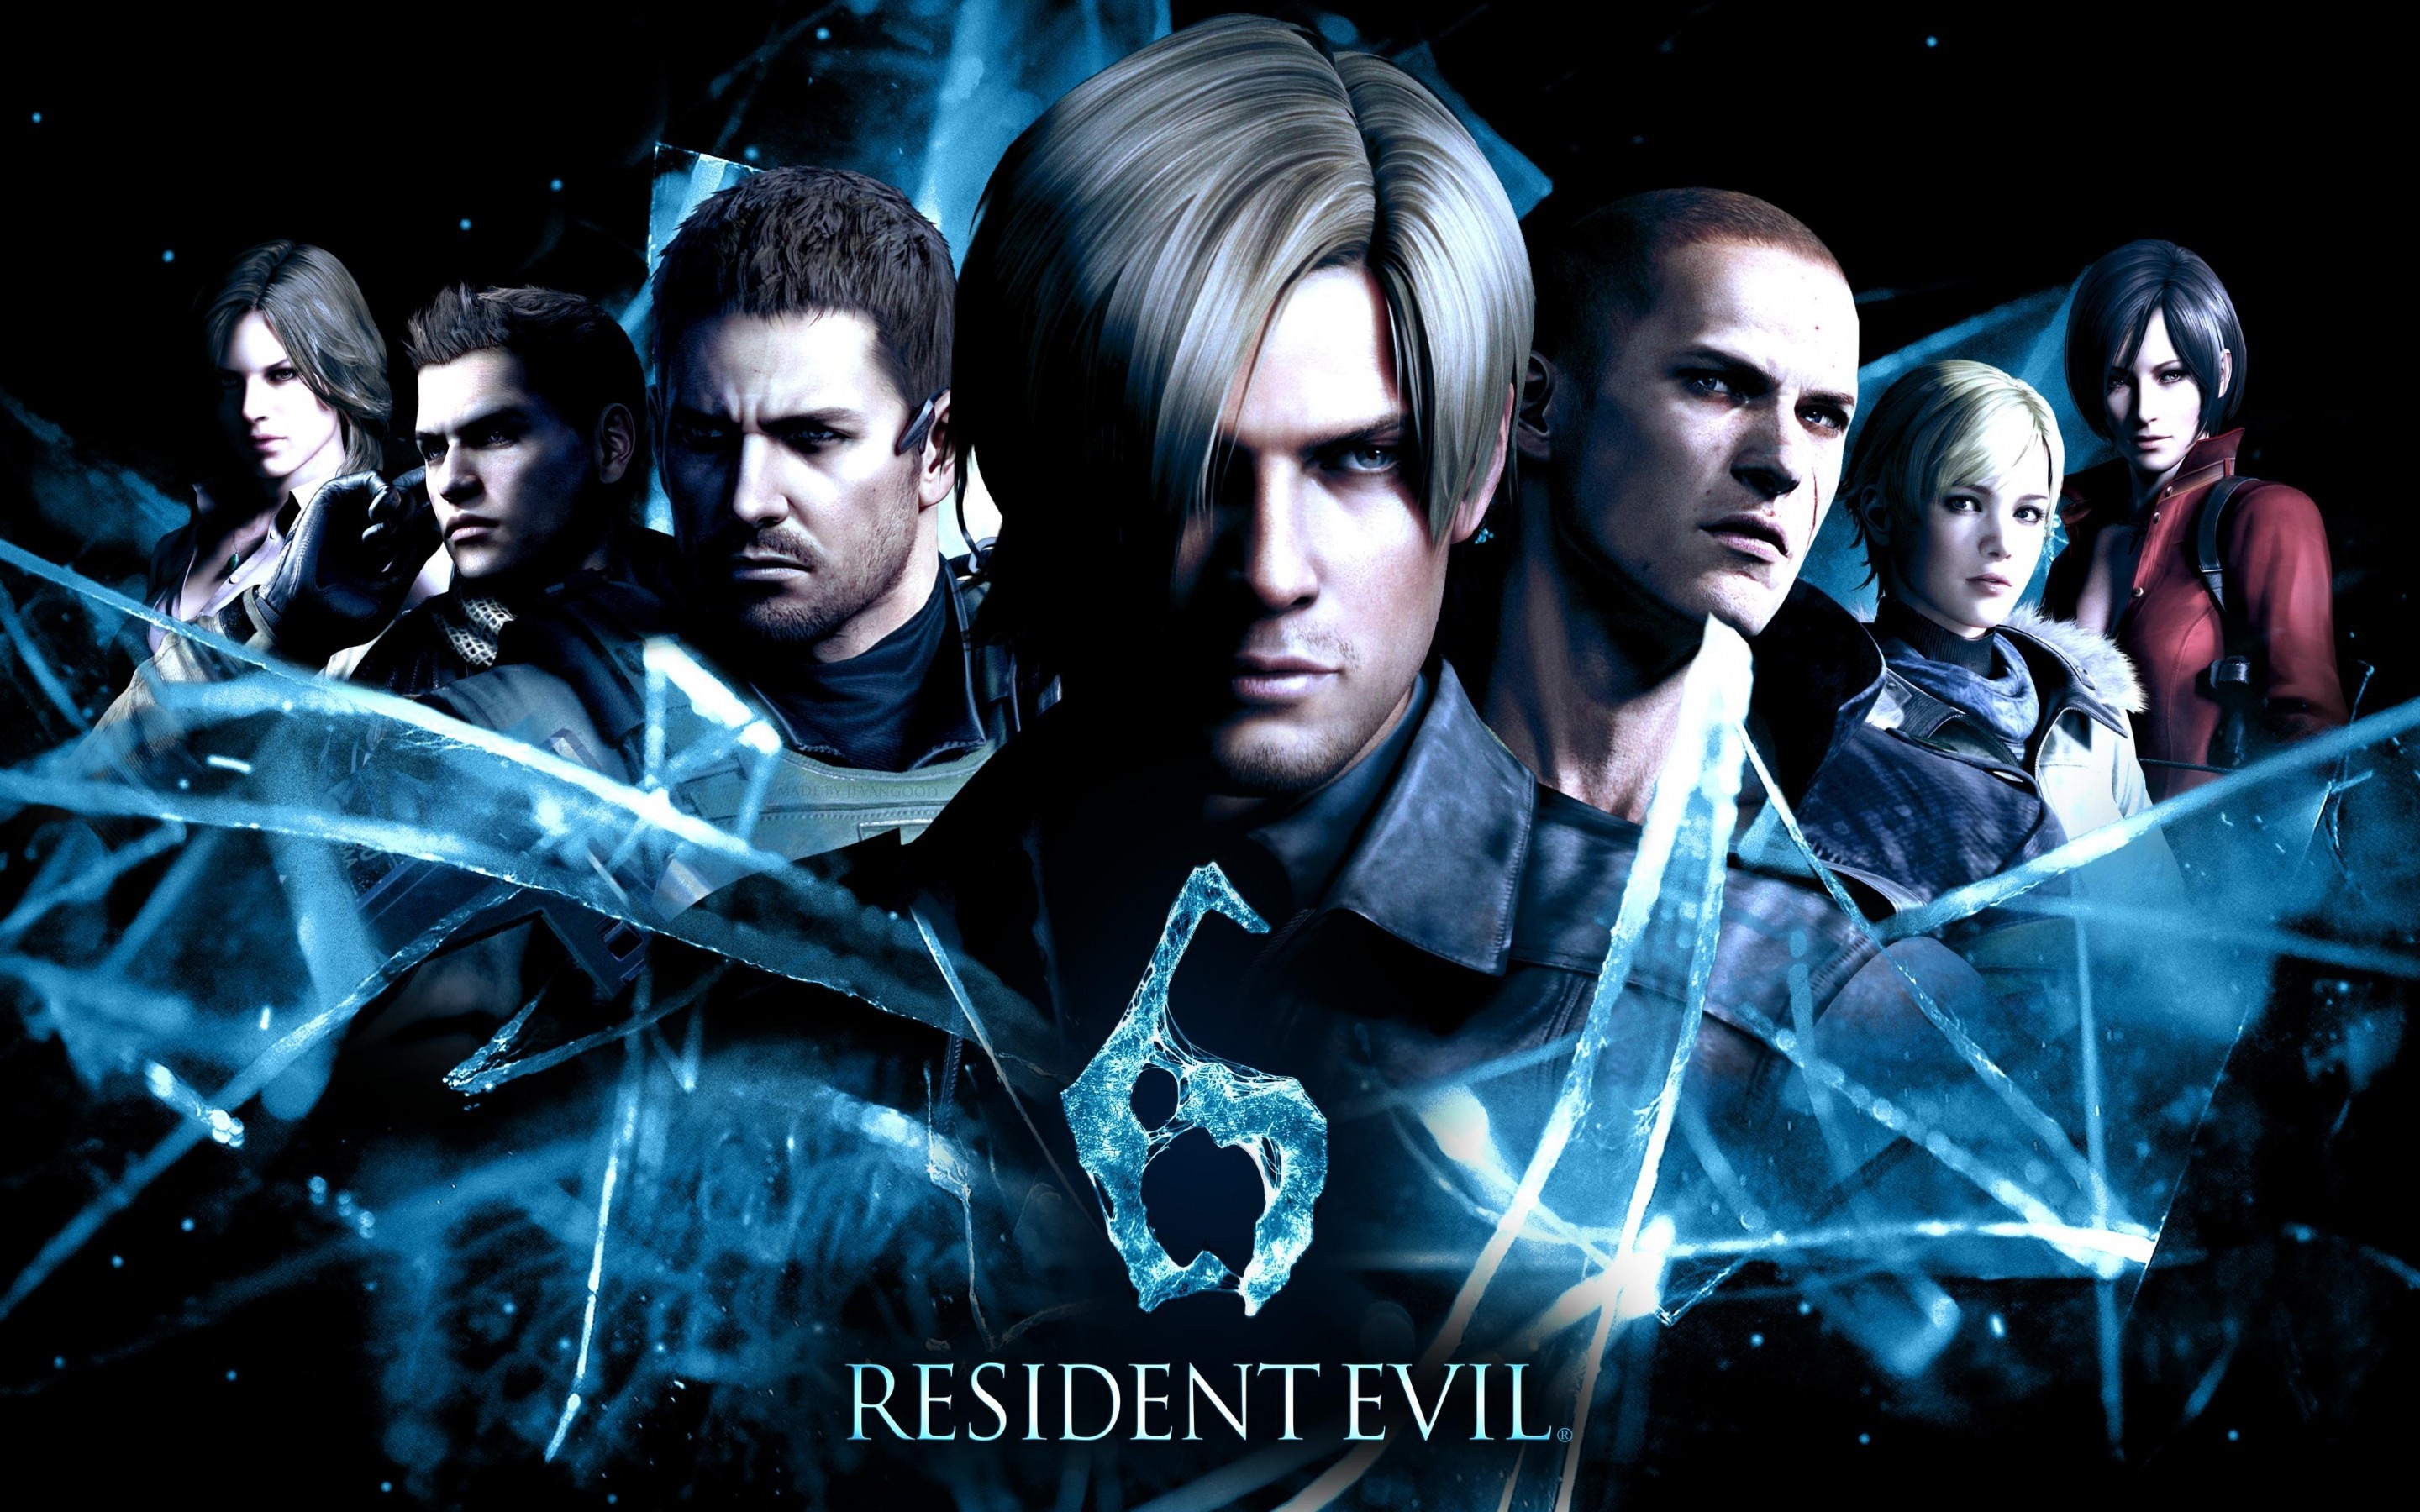 Resident Evil 6 2014 for 2880 x 1800 Retina Display resolution